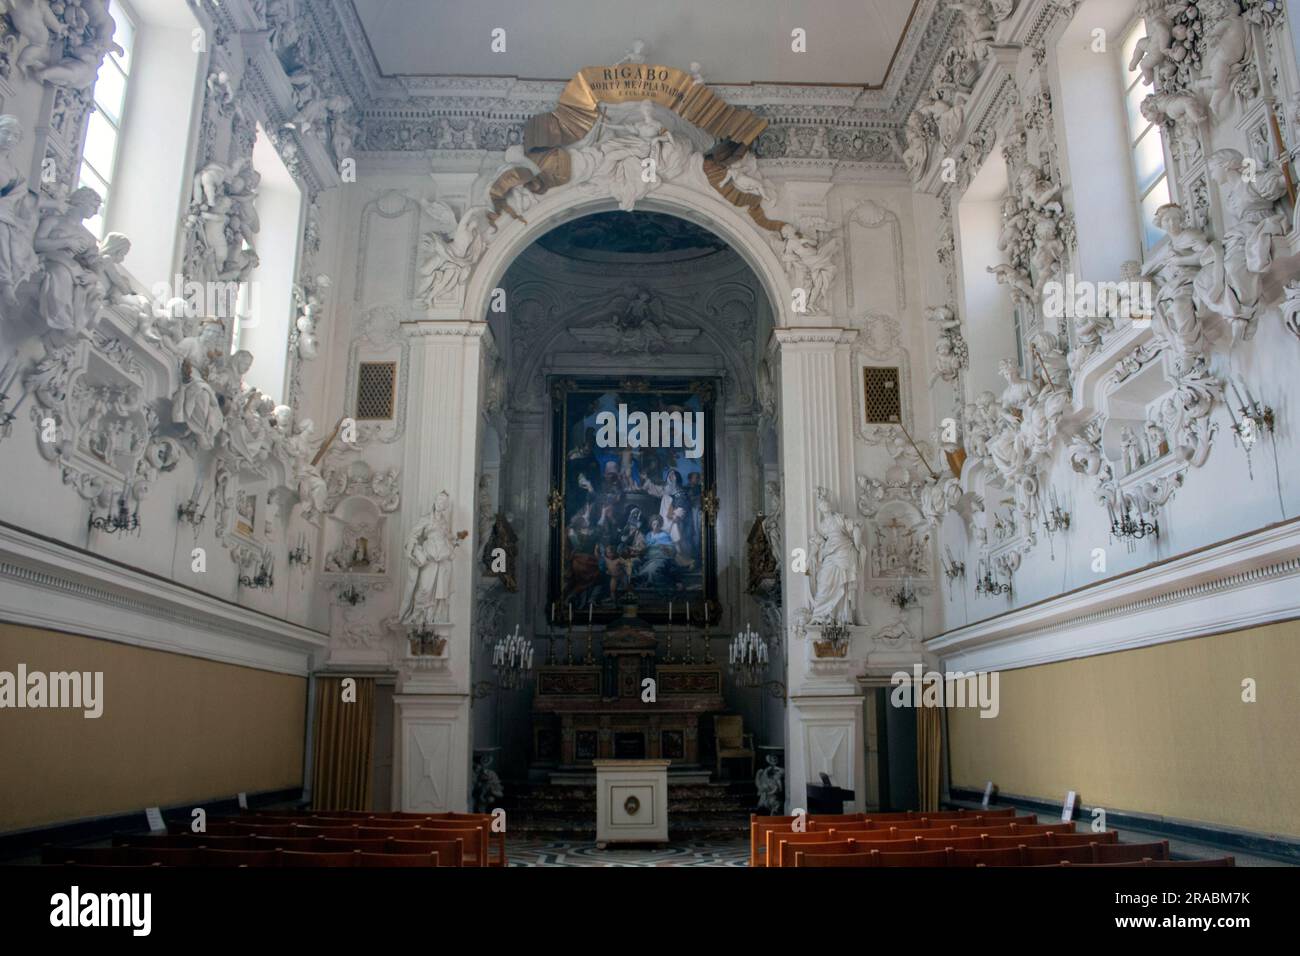 Das barocke Stuckinnere des Oratorio del Rosario di Santa Cita - Oratorium des Rosenkranzes von Santa Cita - Palermo, Sizilien Stockfoto